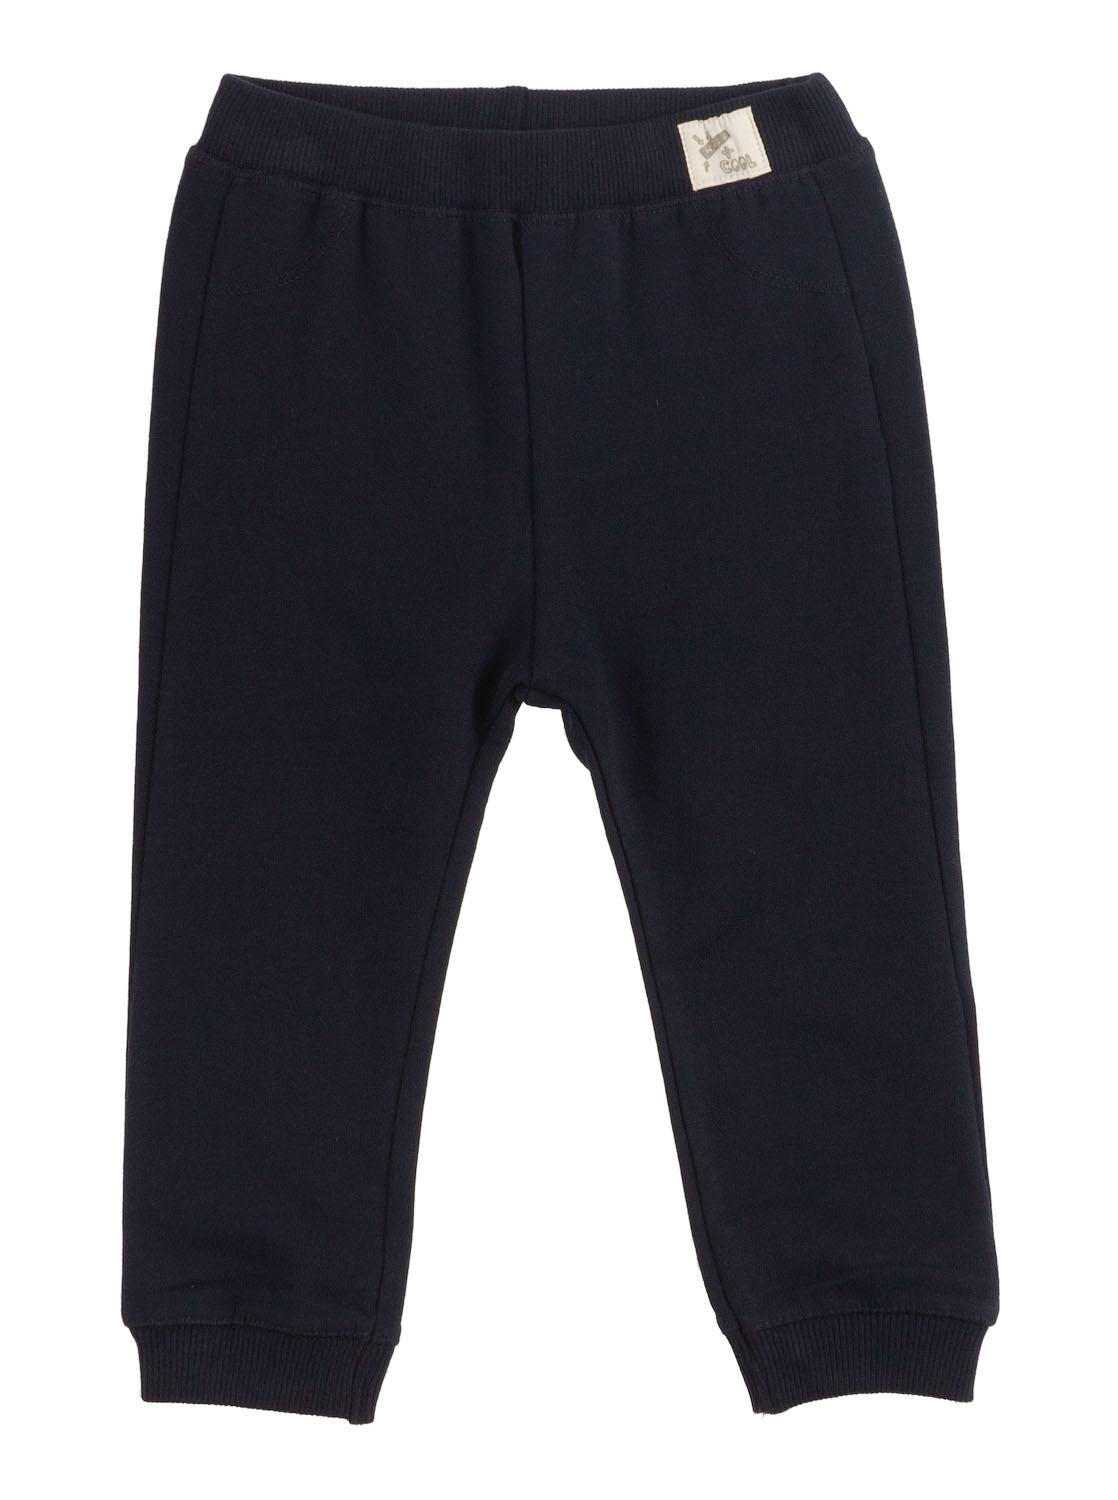 Спортивные штаны Breeze темно-синие 11531 - ціна